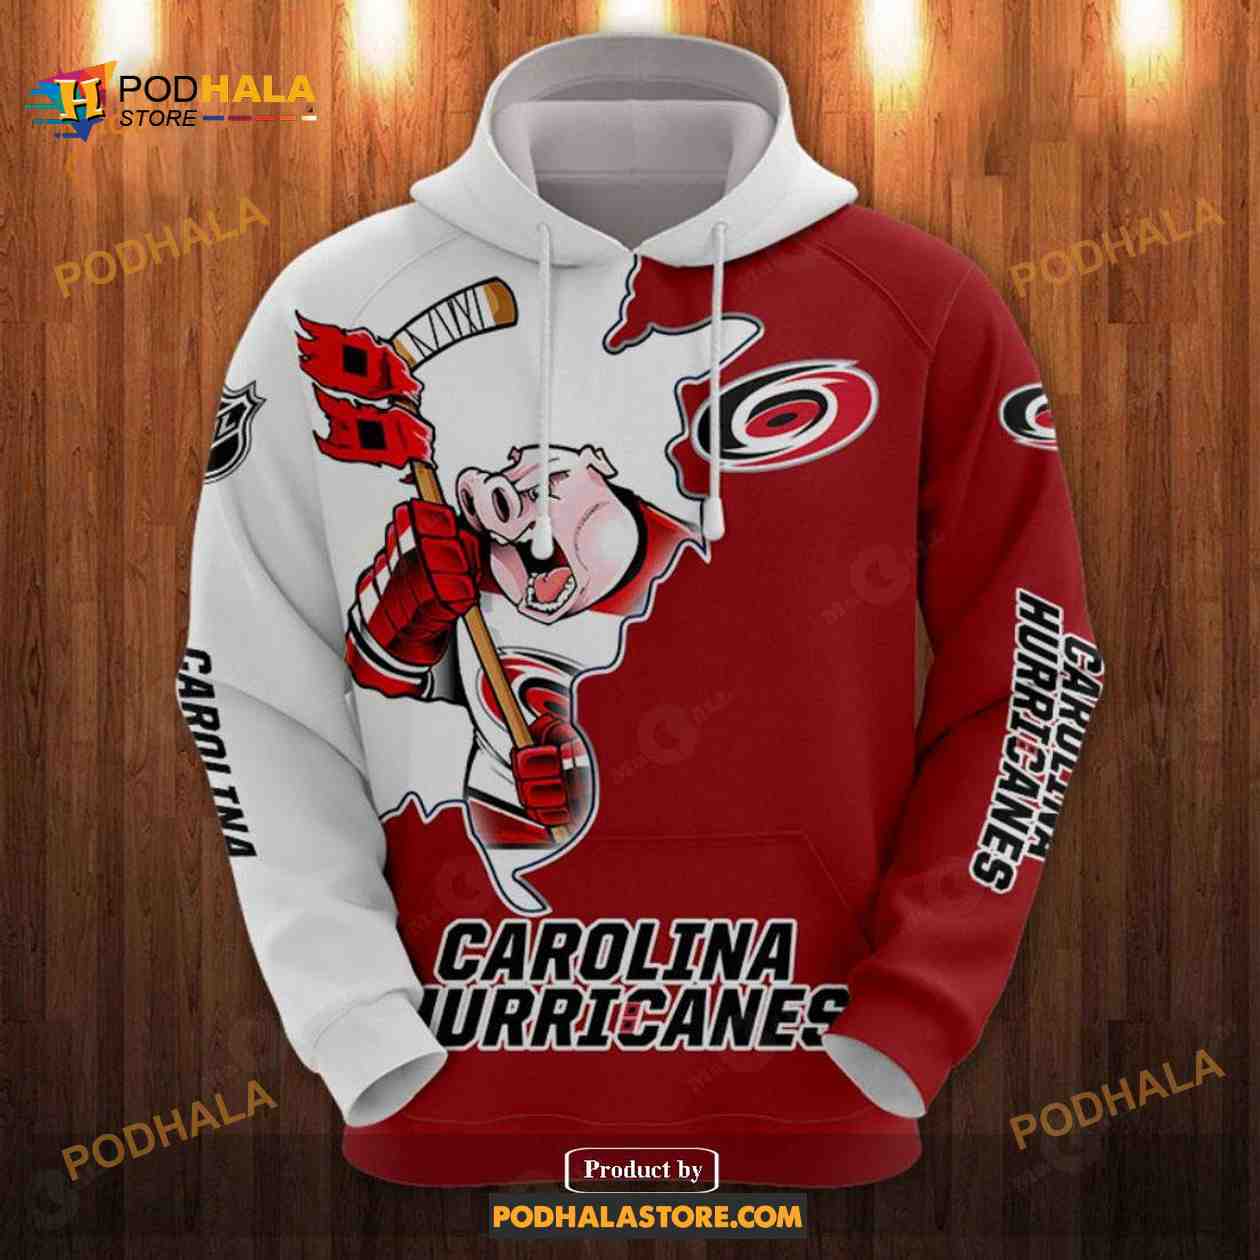 Carolina Hurricanes Merchandise